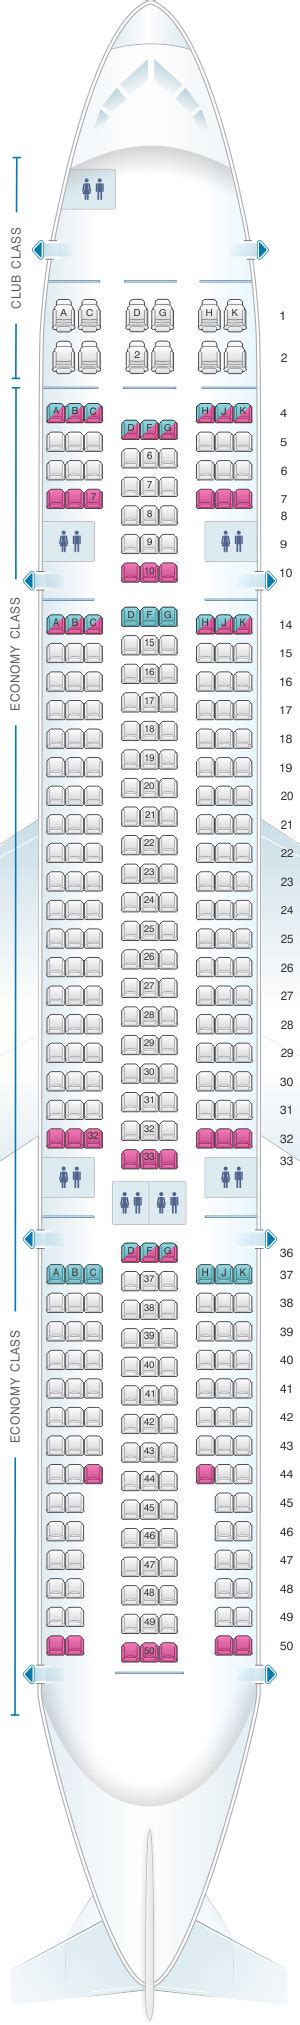 Seat Map Air Transat Airbus A330 200